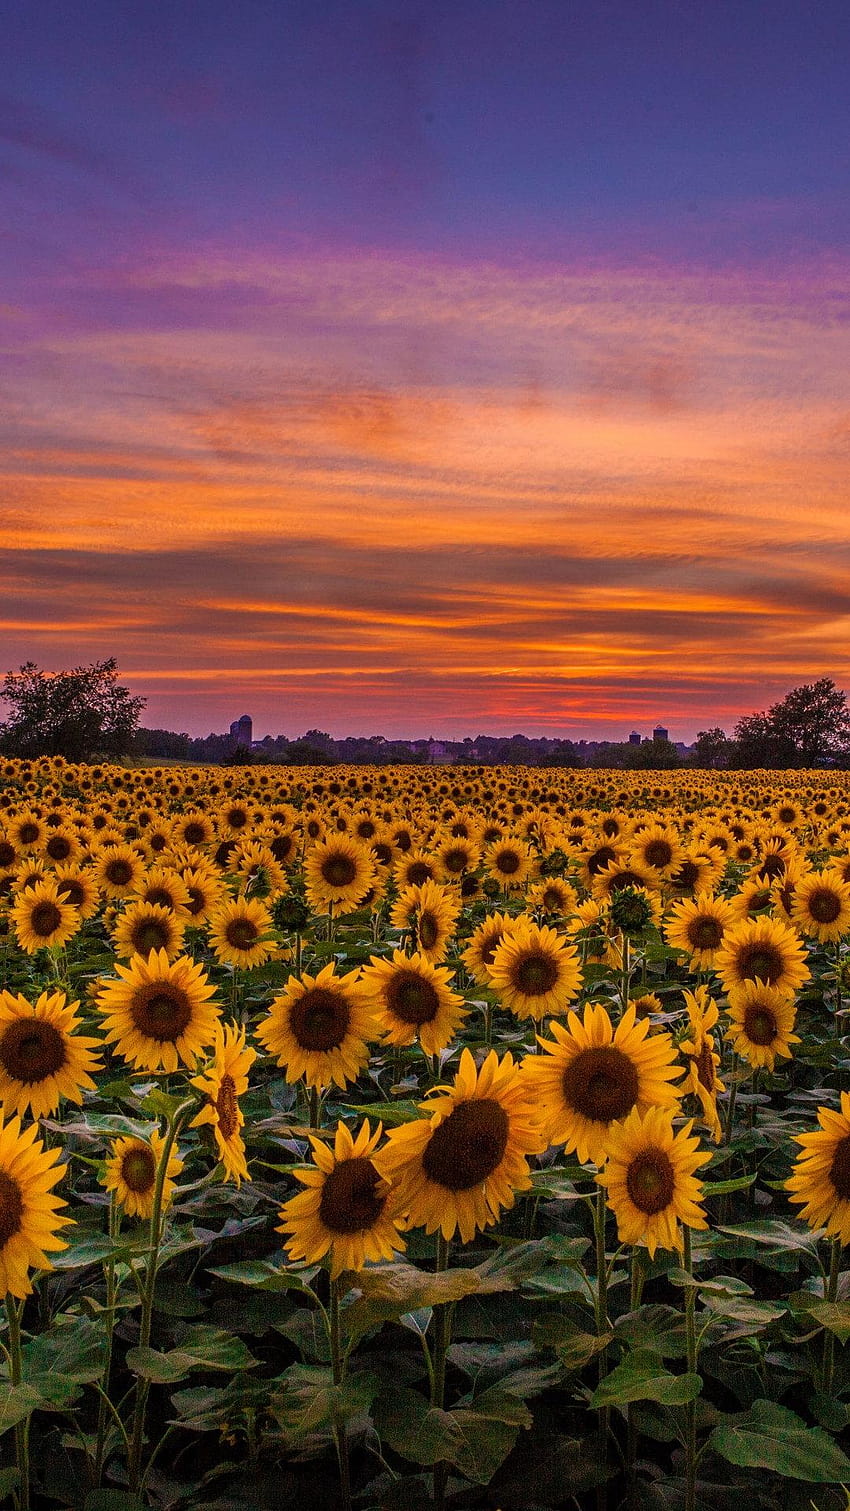 Sunflowers Field Sunset, girassóis ao pôr do sol Papel de parede de celular HD